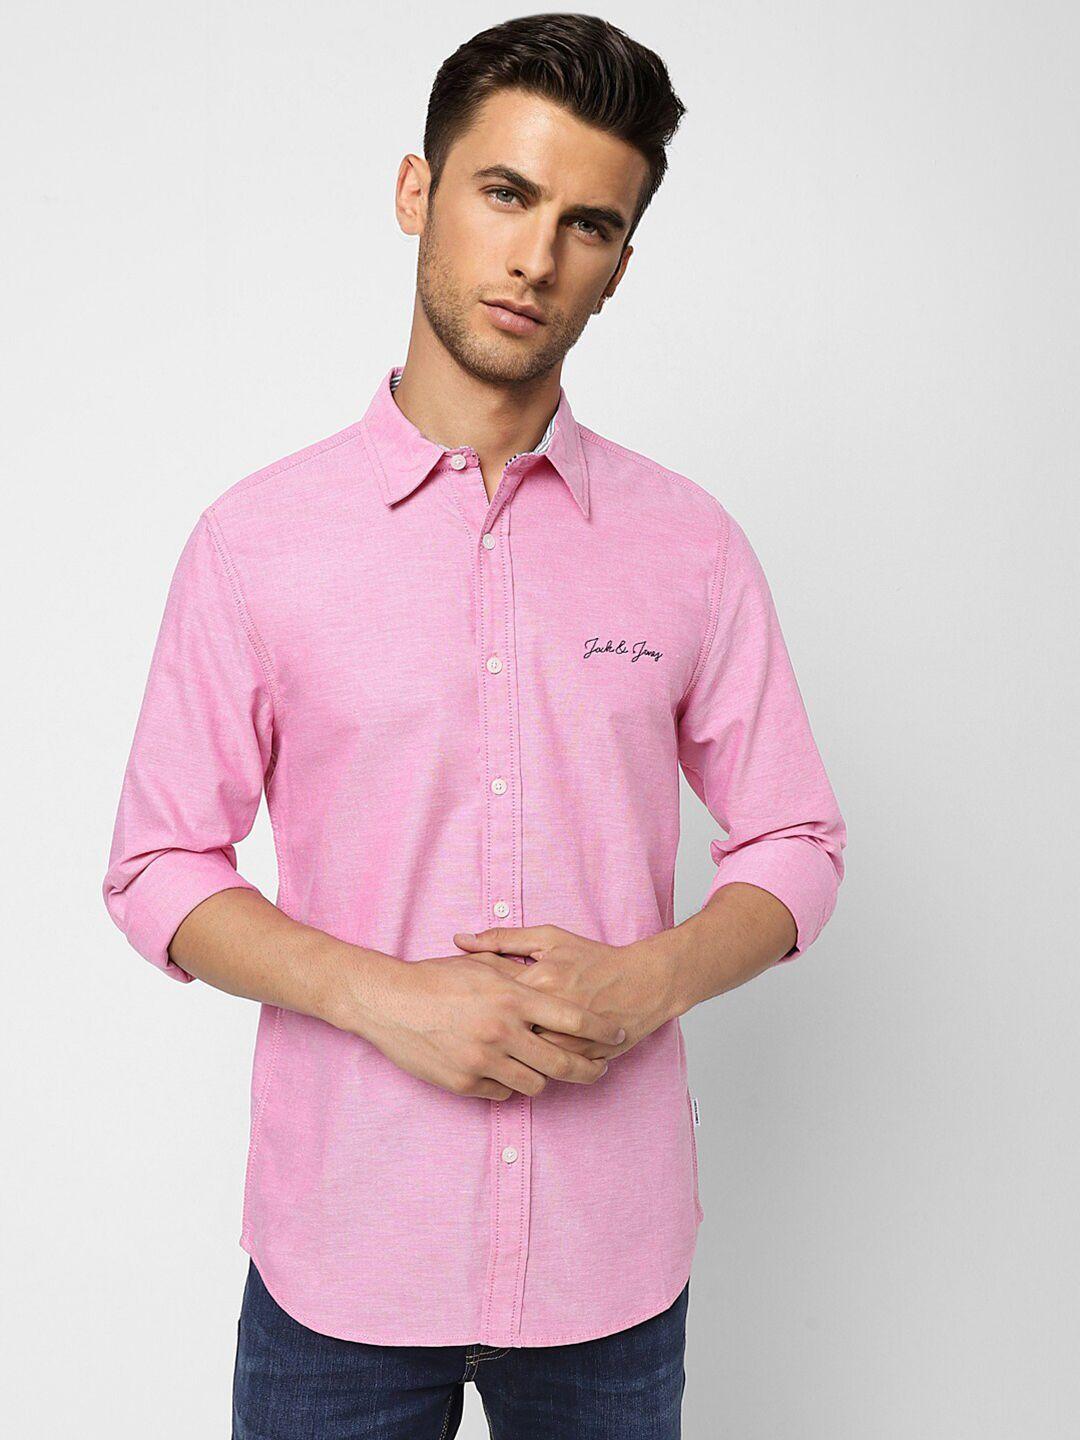 jack & jones men pink cotton casual shirt